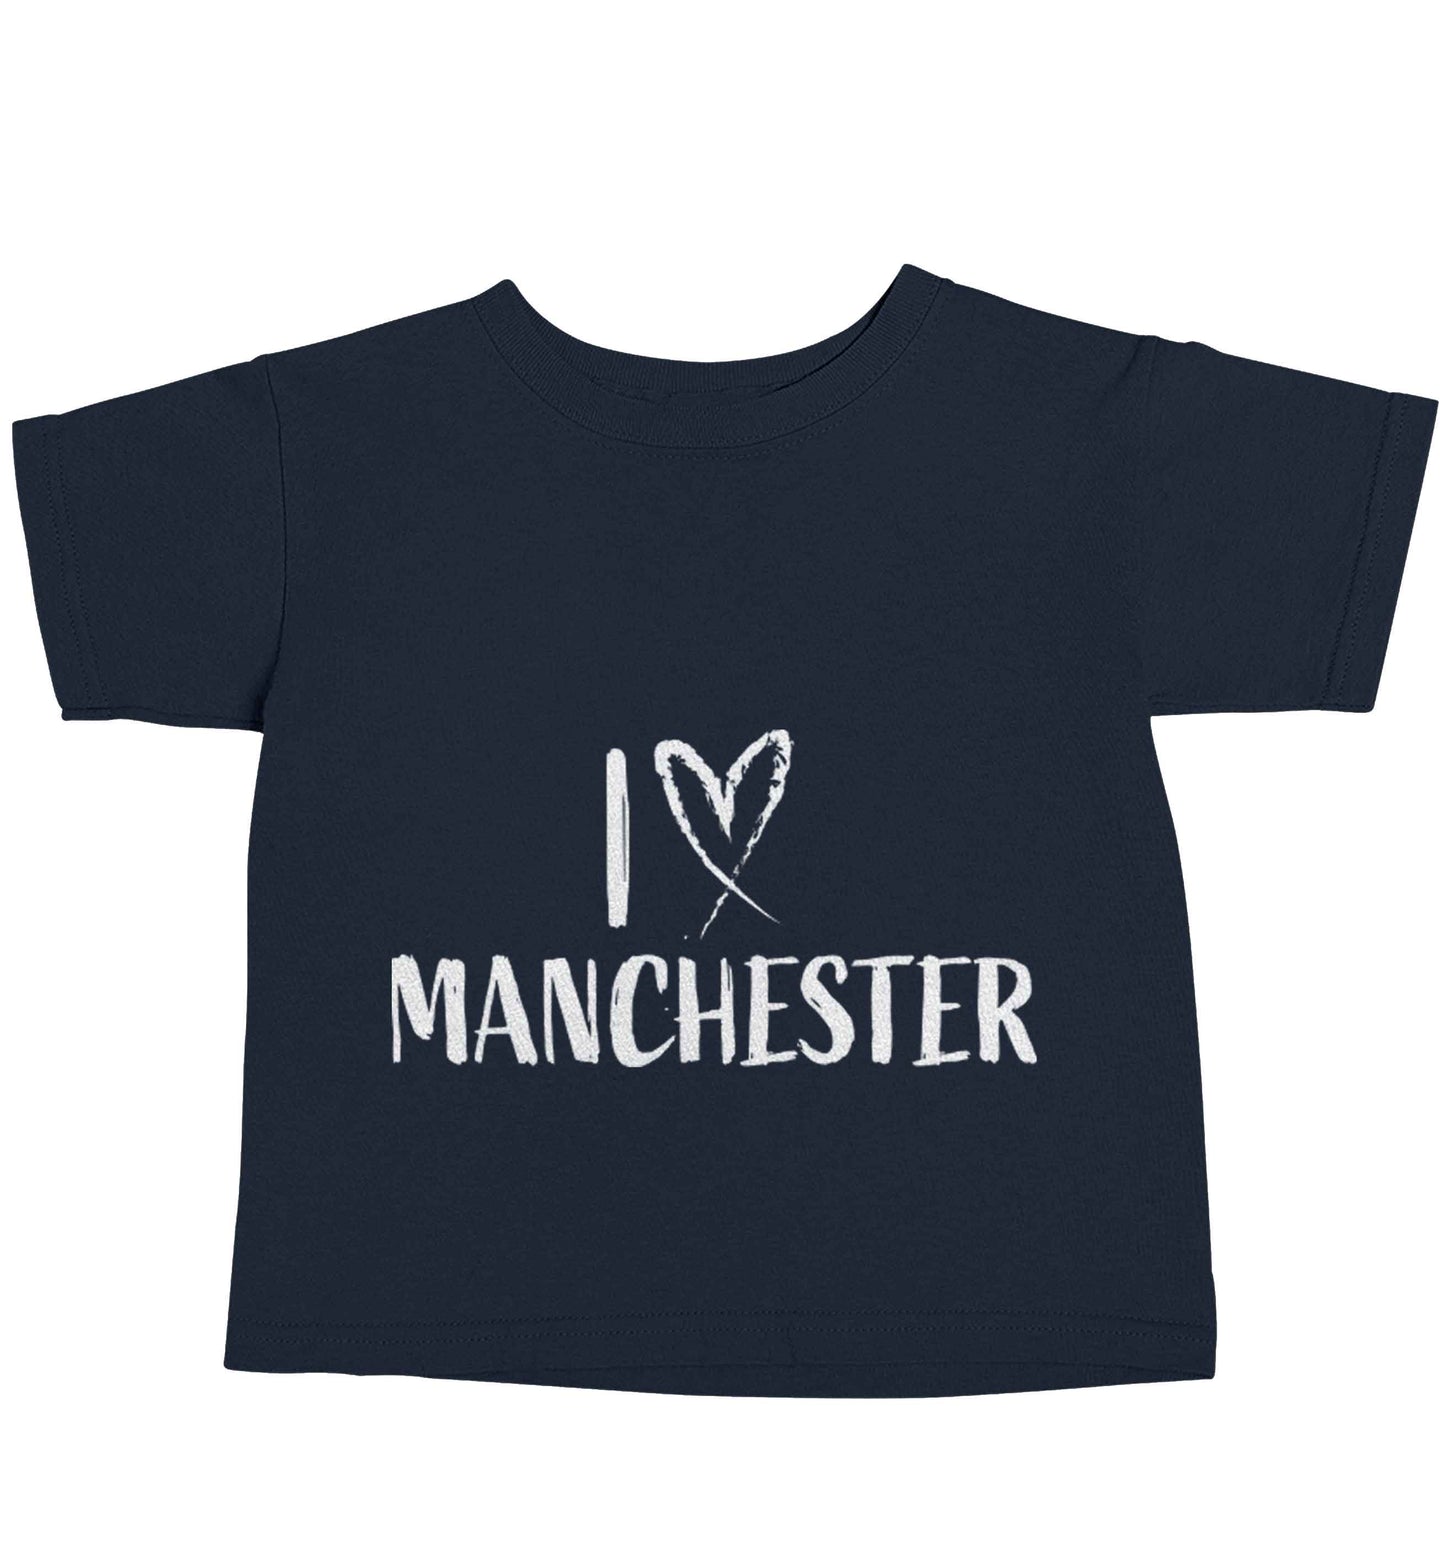 I love Manchester navy baby toddler Tshirt 2 Years